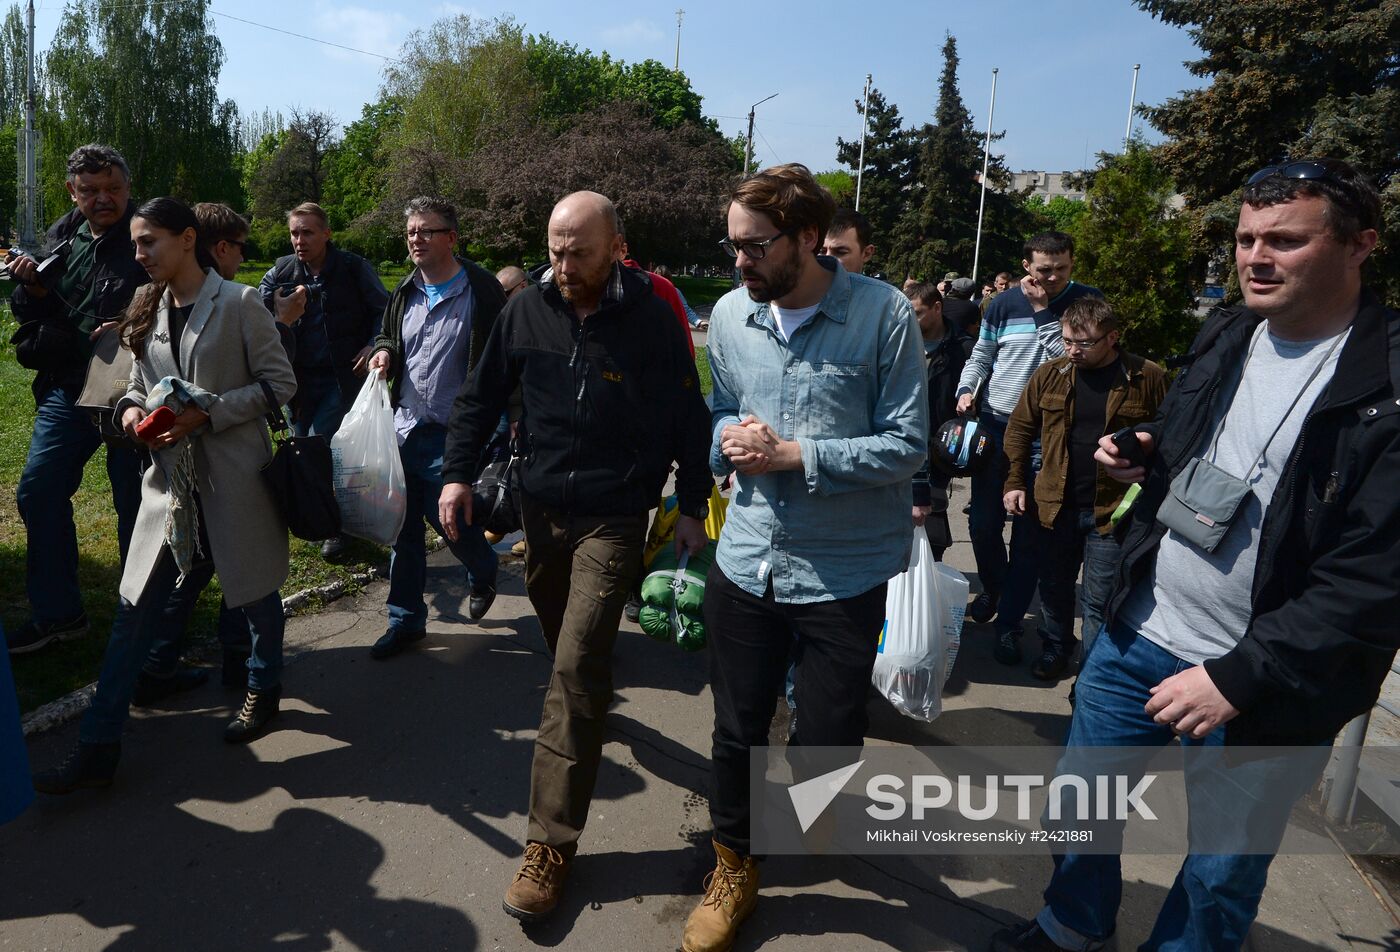 OSCE foreign military observers released in Slavyansk